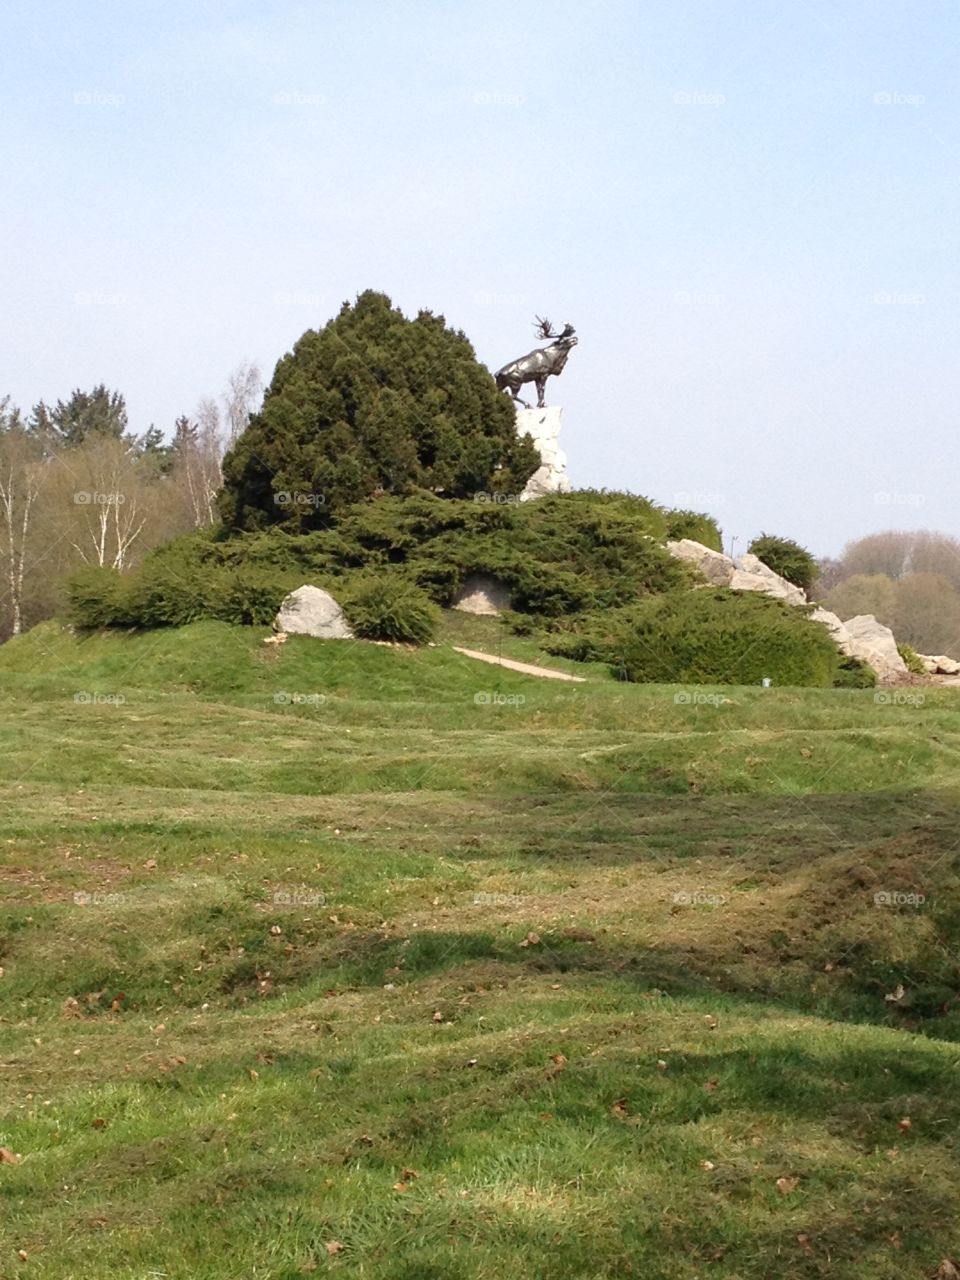 More trench lands in Berlin with a deer sculpture 